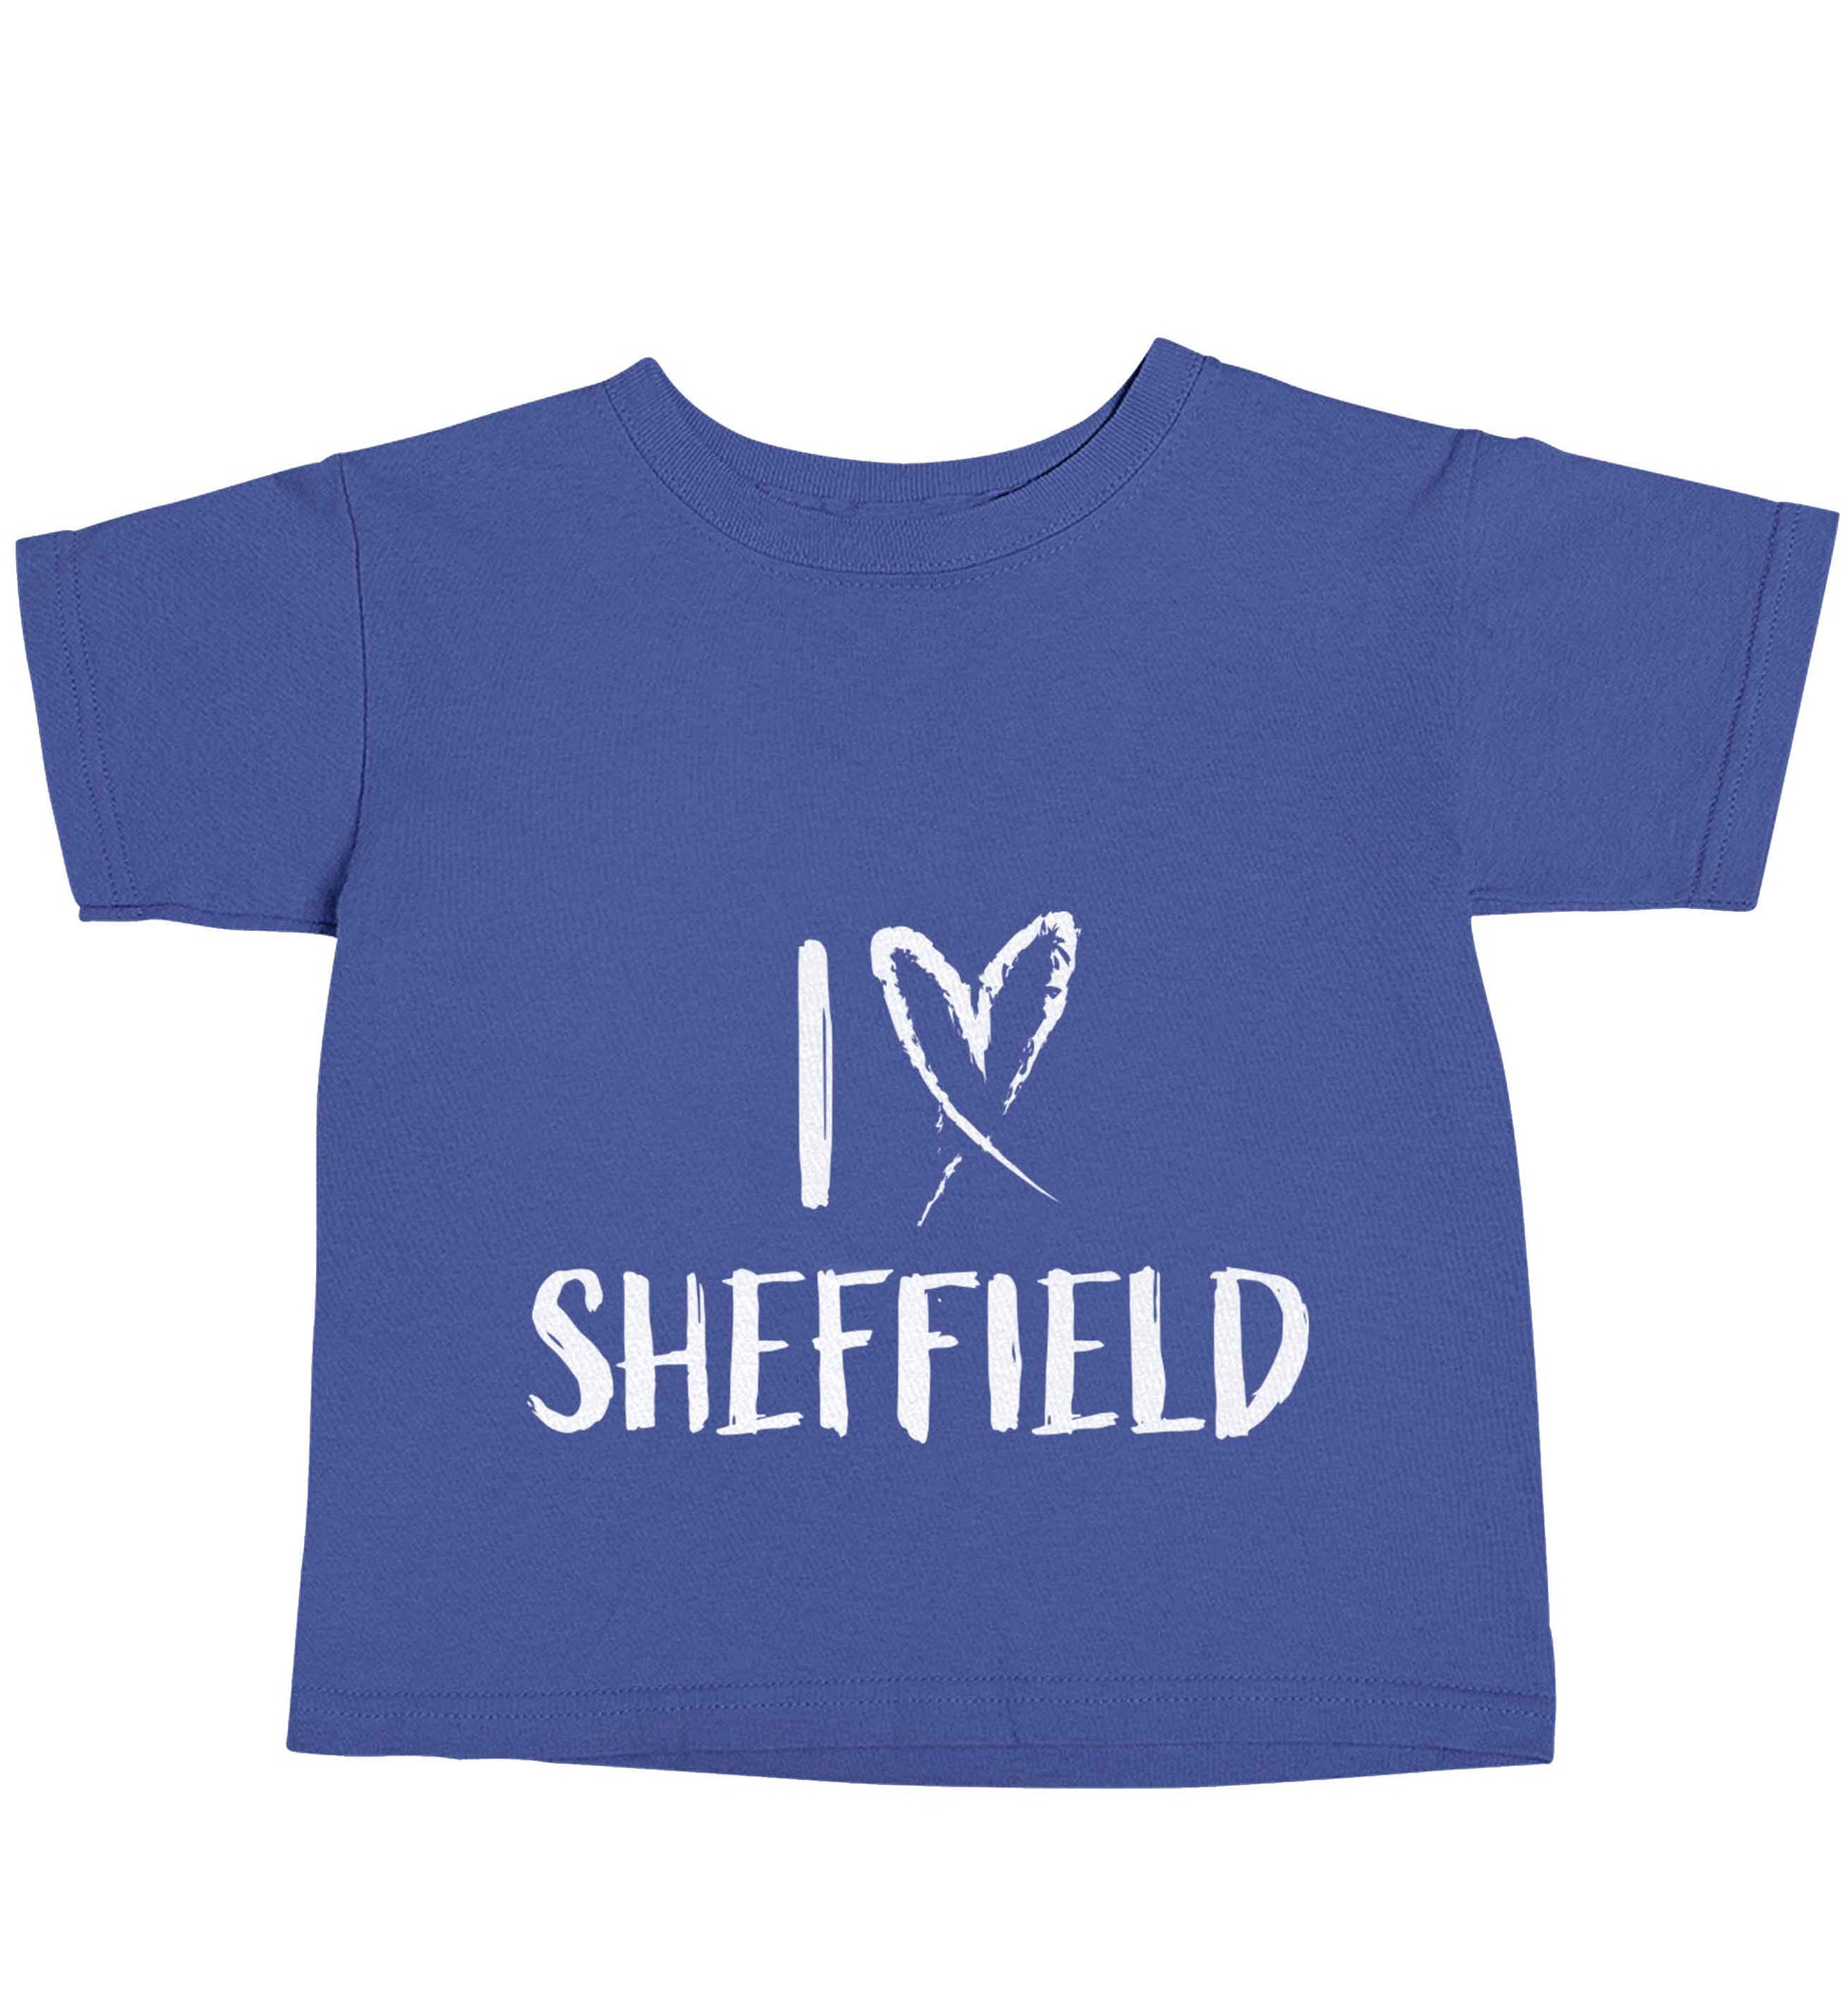 I love Sheffield blue baby toddler Tshirt 2 Years